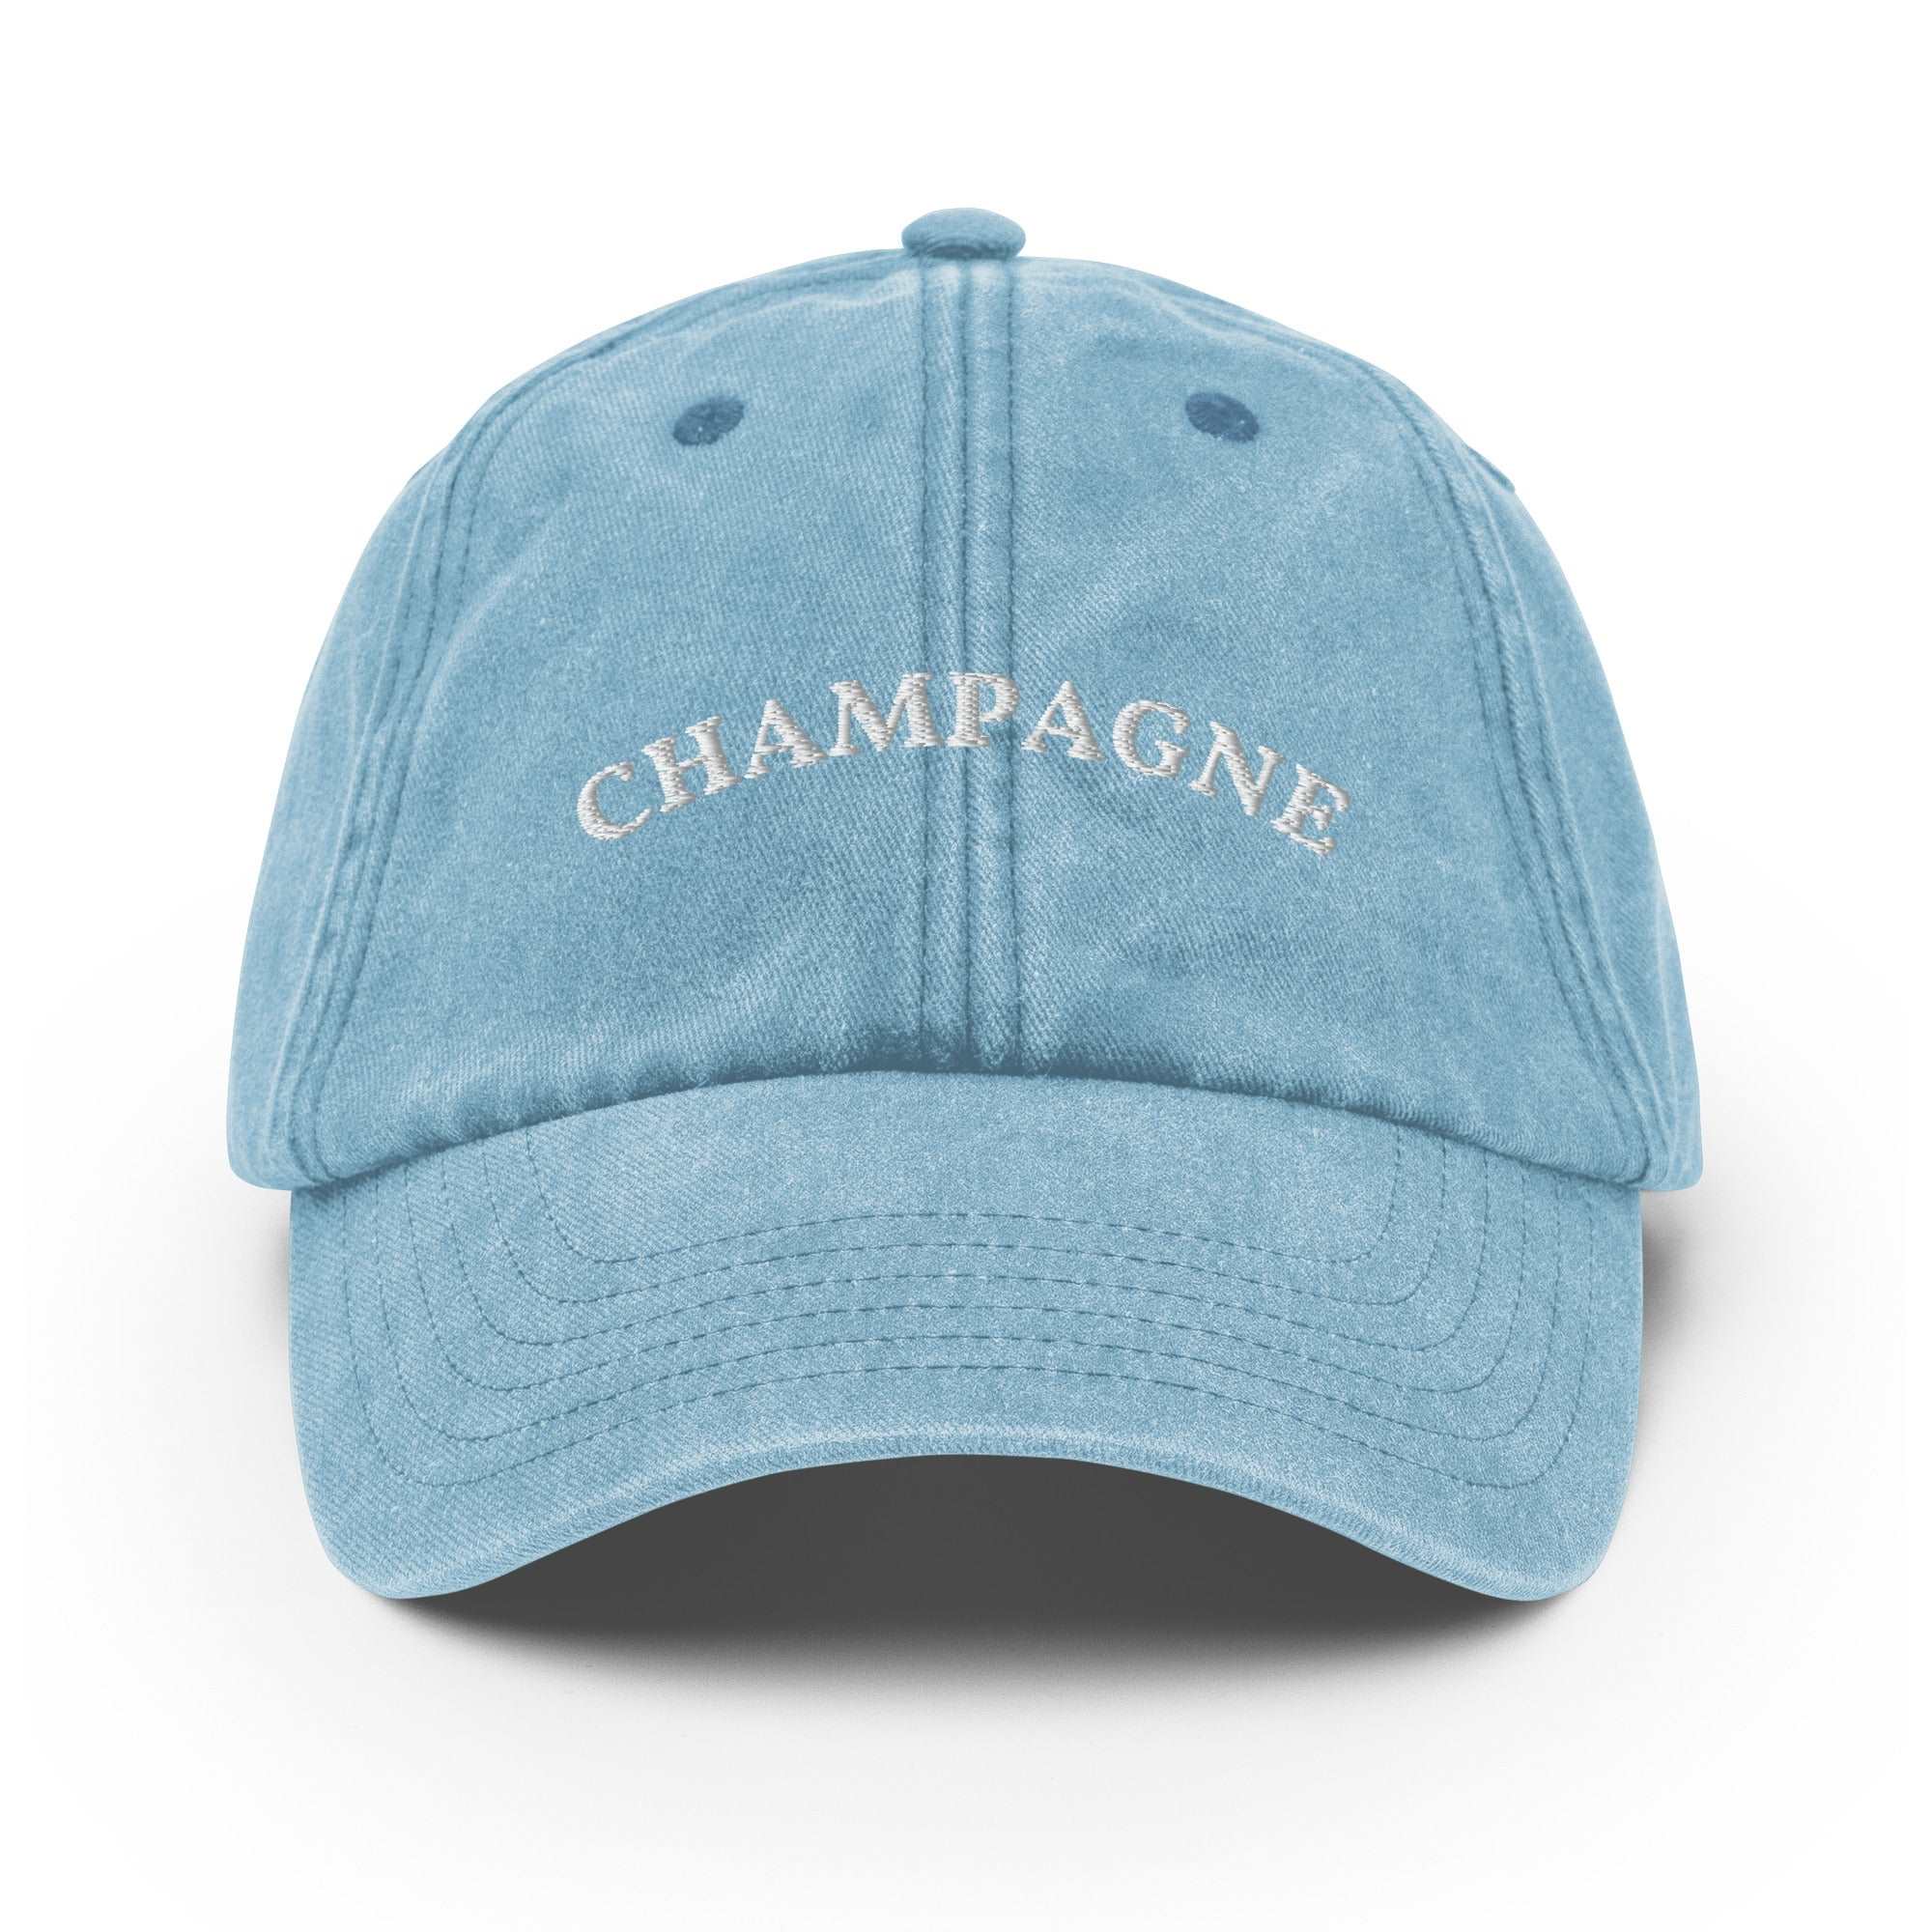 Champagne Vintage Cap - The Refined Spirit